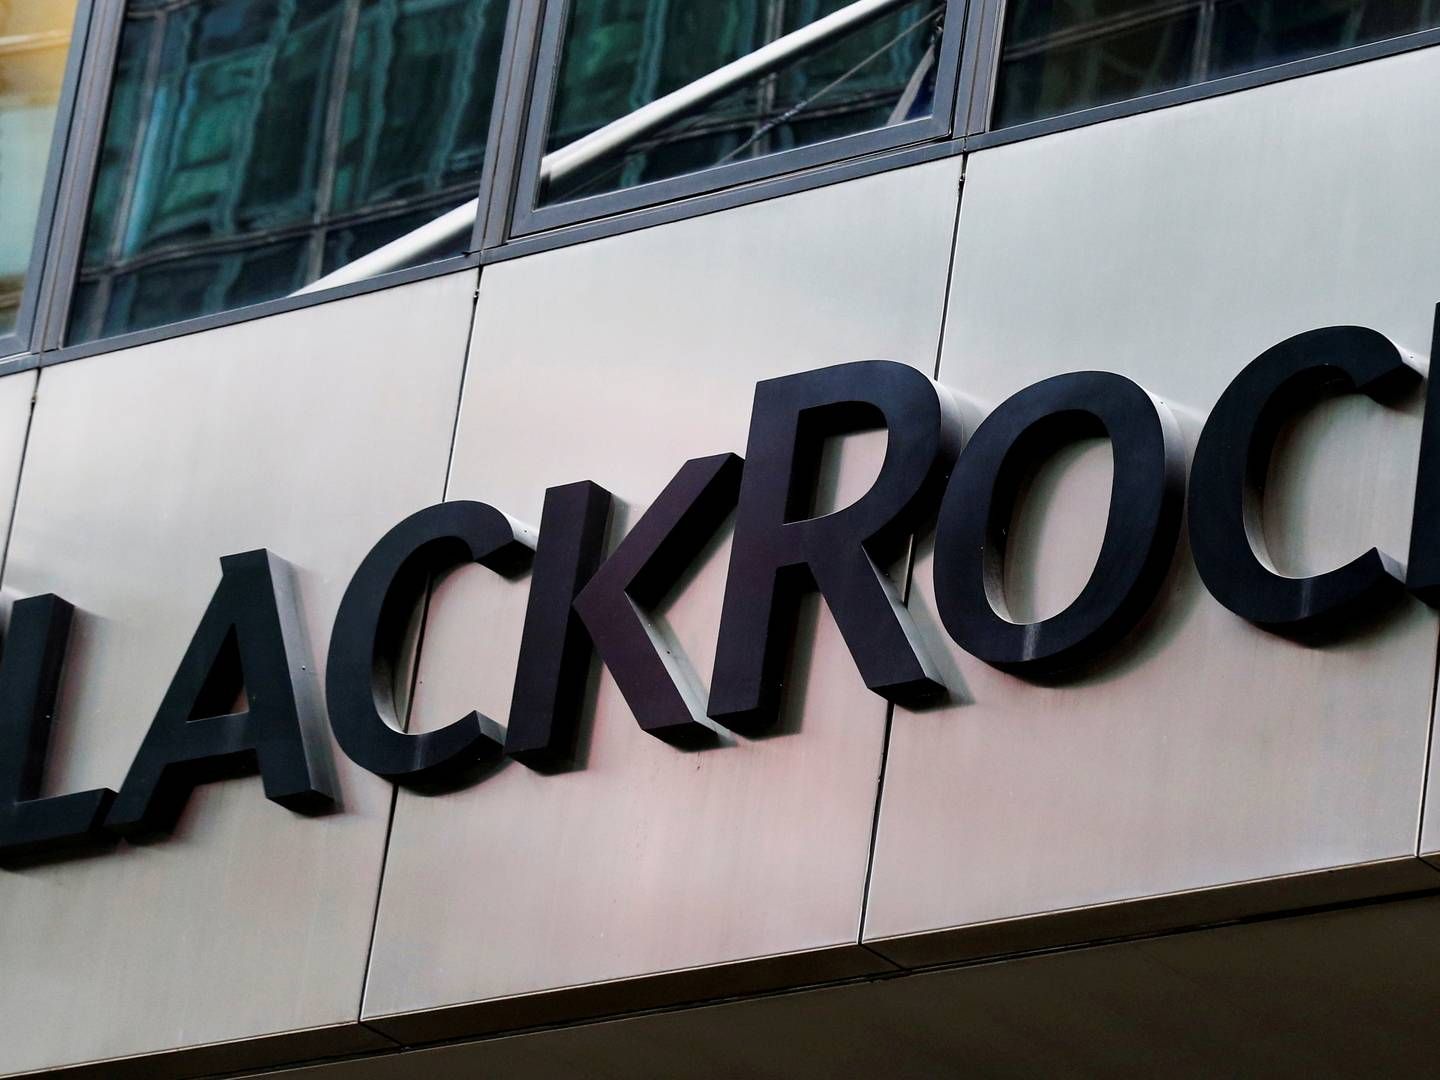 Blackrocks nye etf møder stor kritik. | Foto: BRENDAN MCDERMID/REUTERS / X90143